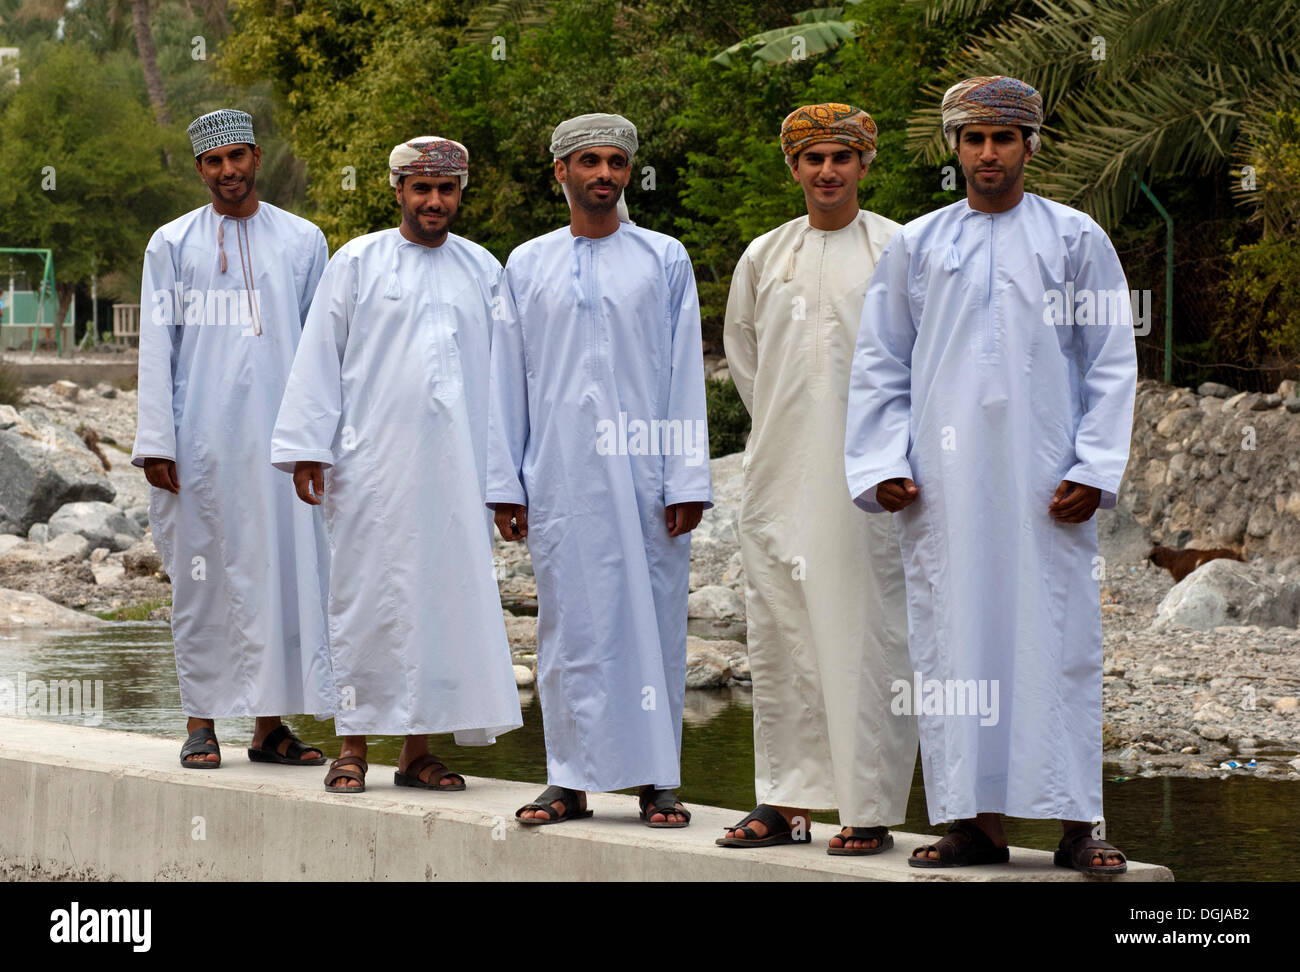 five-young-omani-men-wearings-traditional-dishdasha-festive-clothes-DGJAB2.jpg